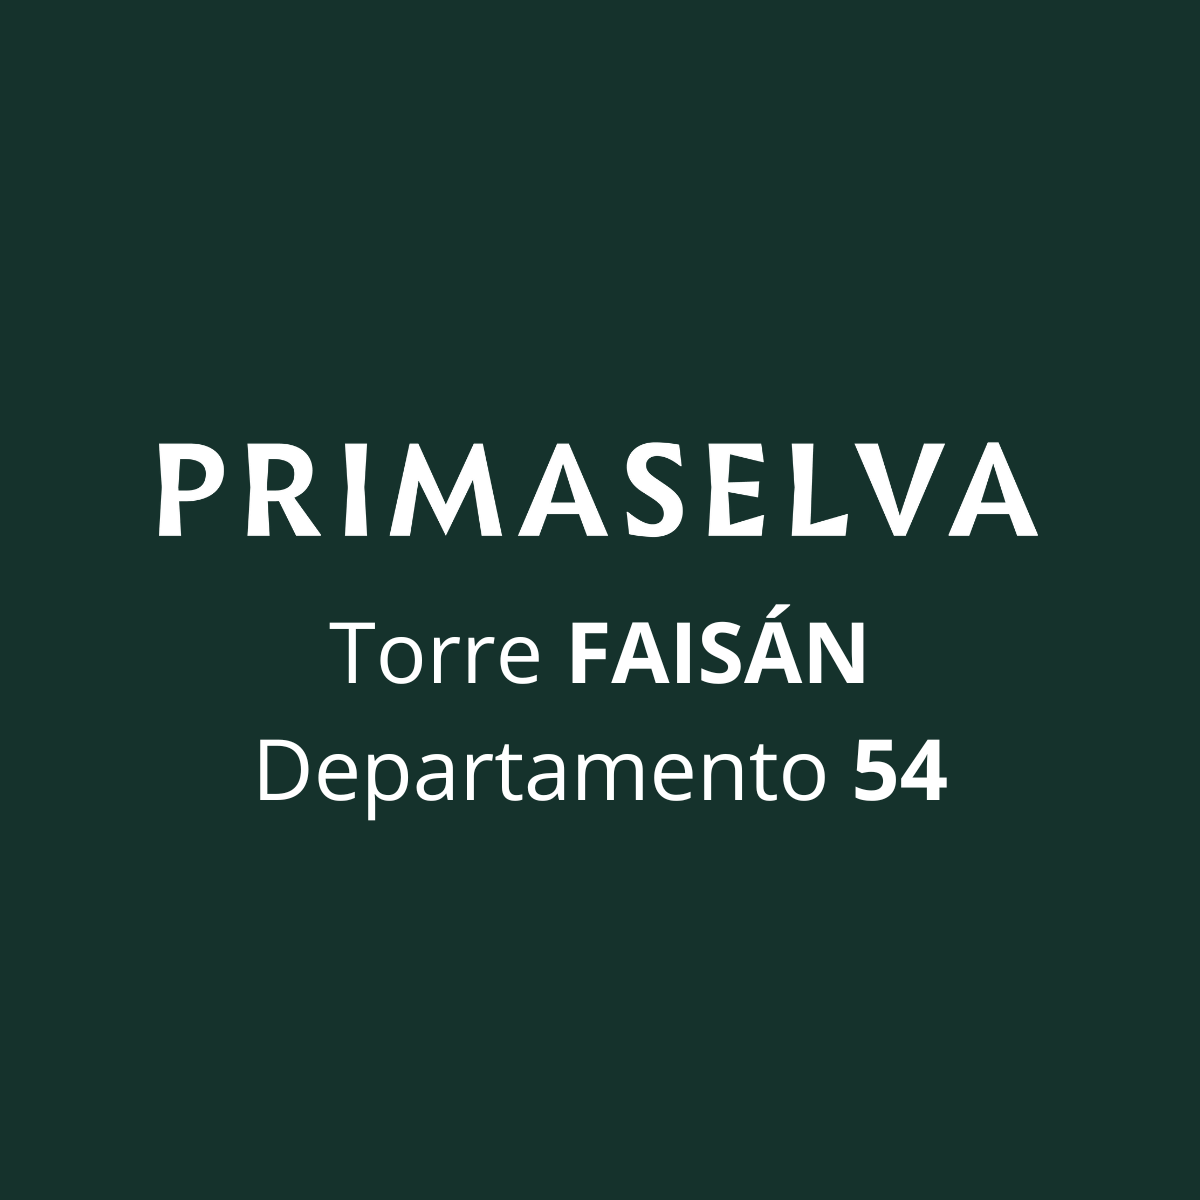 1 de 39: PRIMASELVA. Pent house de 3 recámaras en Mérida